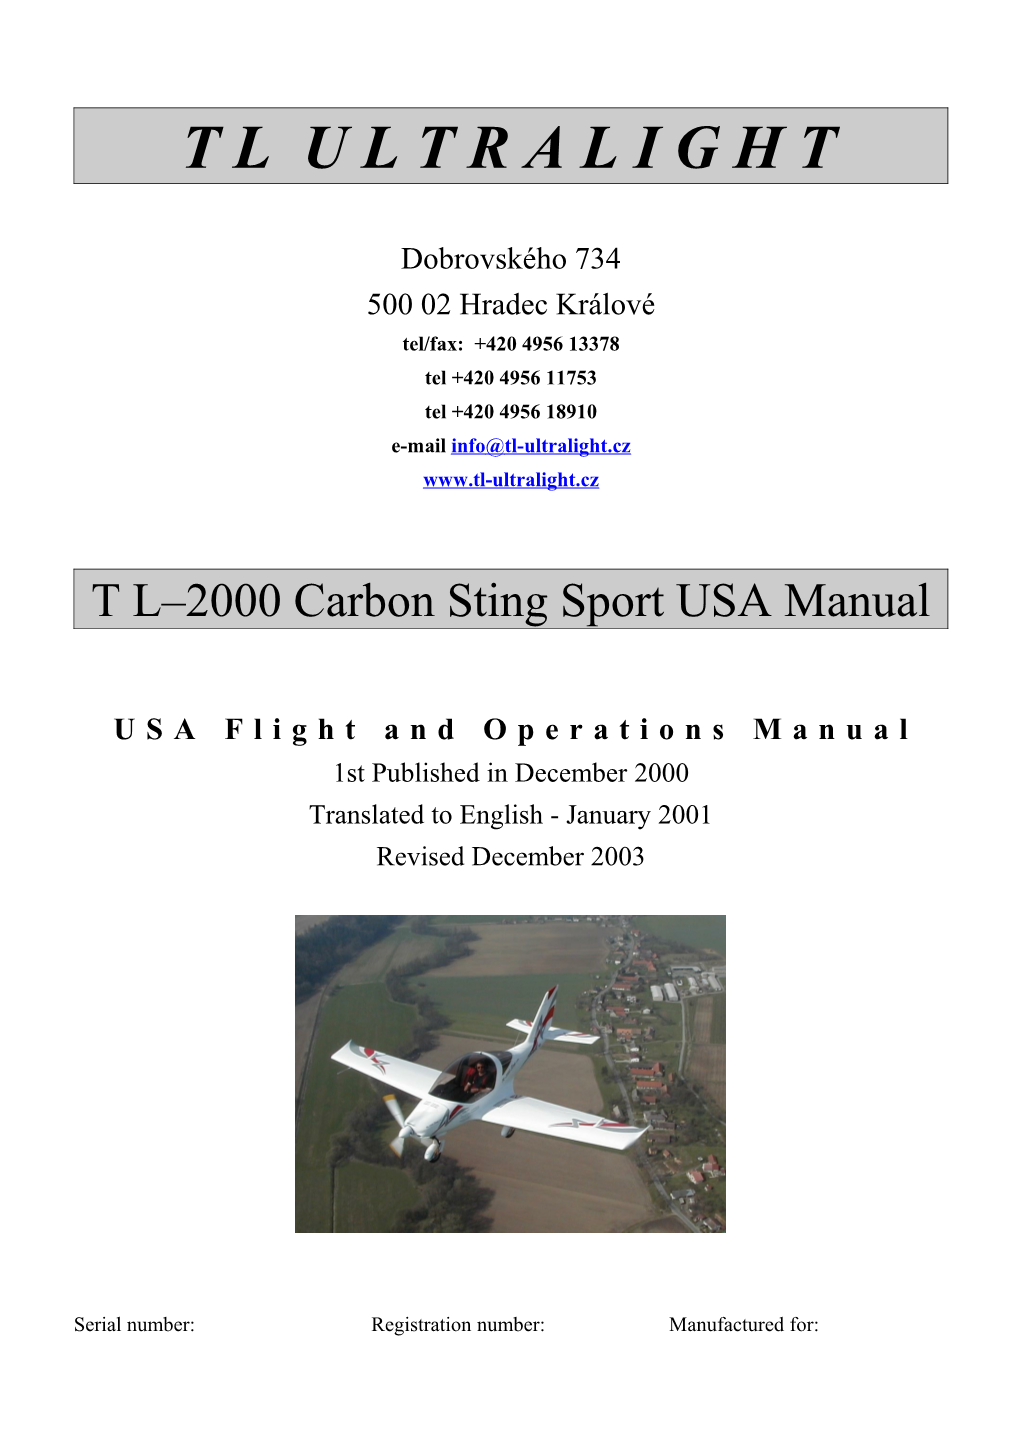 USA Flight and Operations Manual